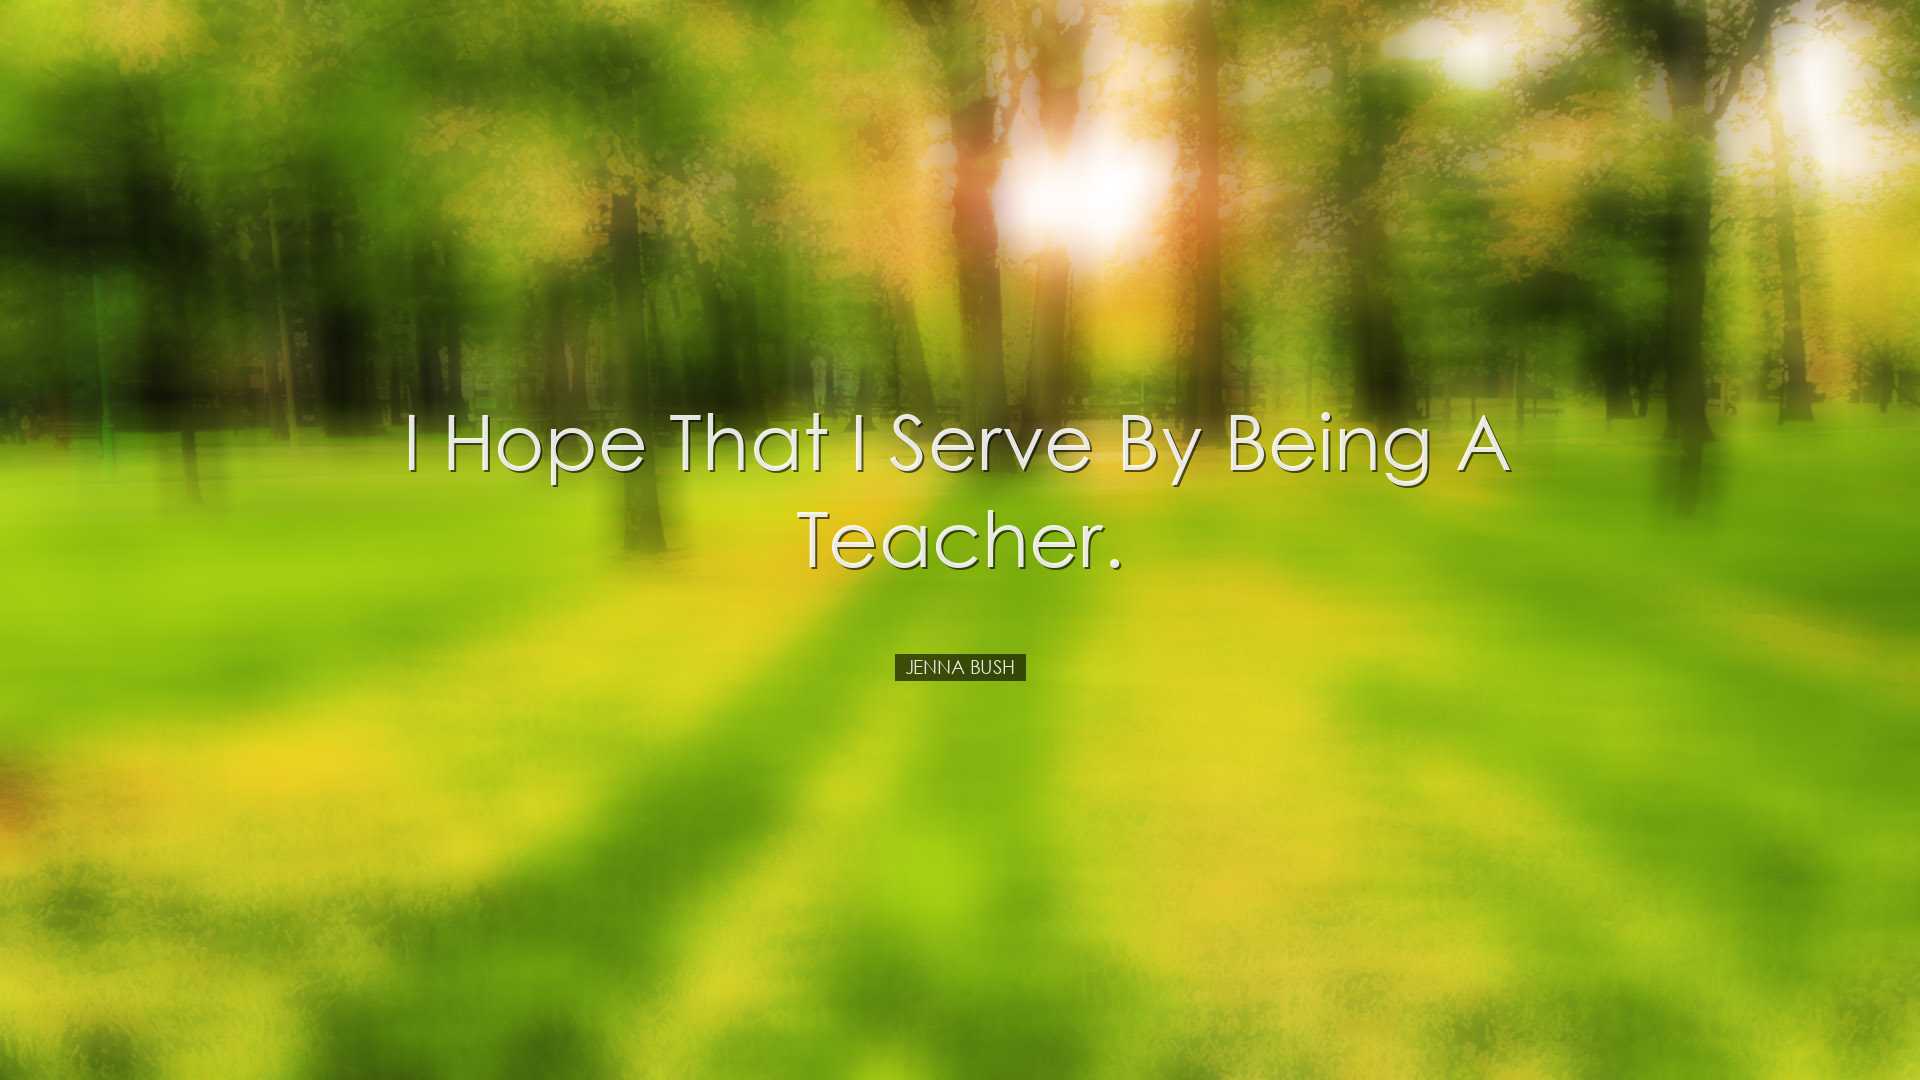 I hope that I serve by being a teacher. - Jenna Bush